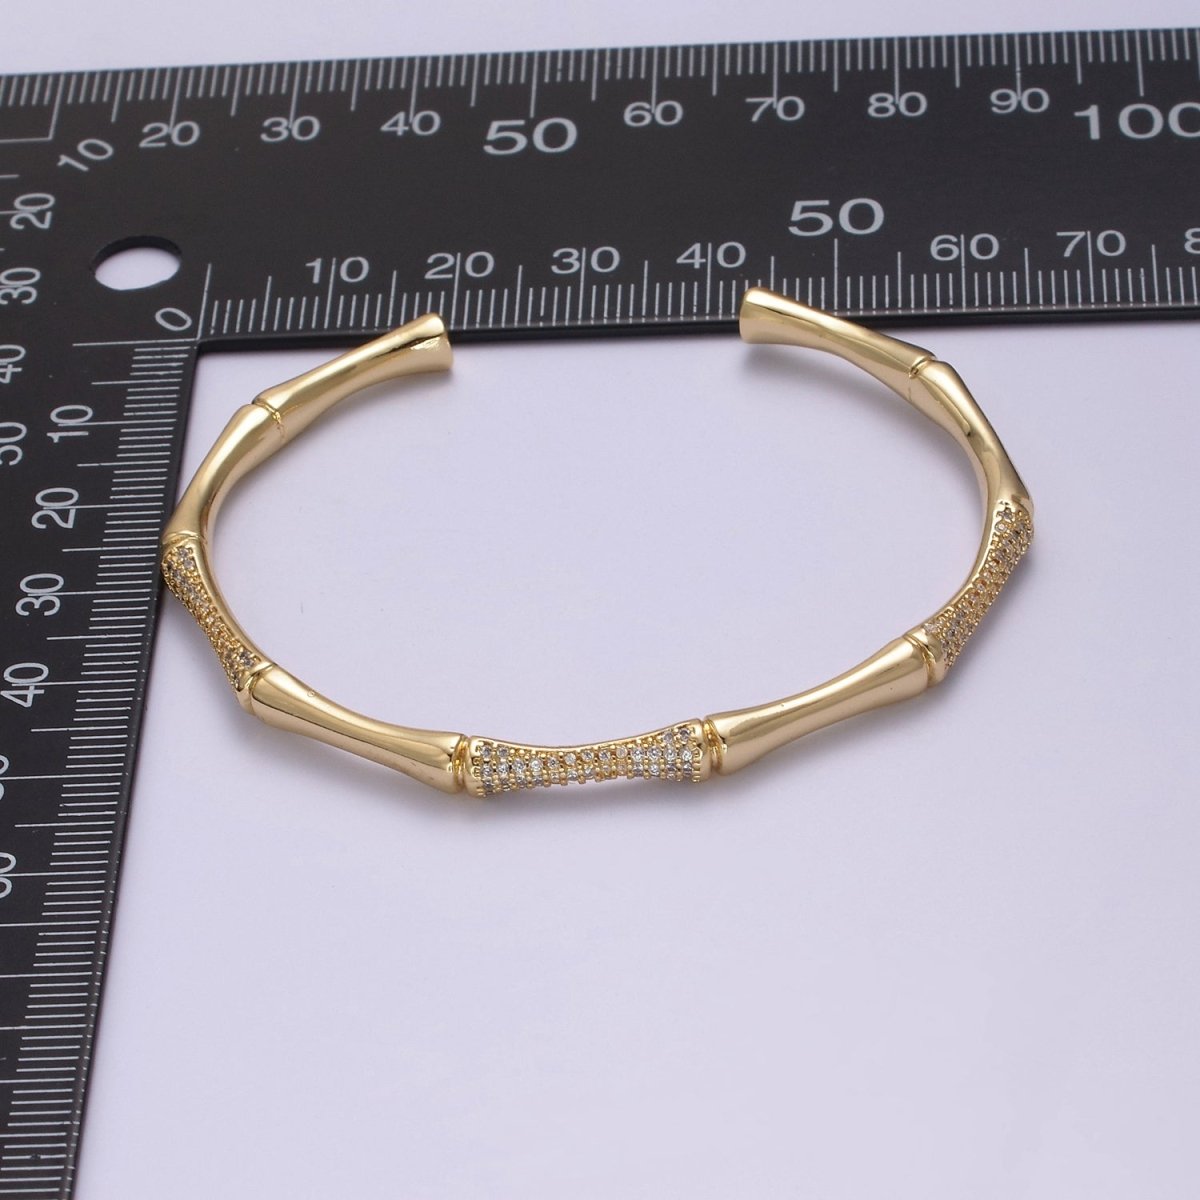 Gold Bamboo Bracelet, Silver Cuff Bangle Bracelet CZ Gold Bamboo Bangle, Adjustable Stackable Jewelry Minimalist Open Bracelet | WA-698 WA-699 Clearance Pricing - DLUXCA